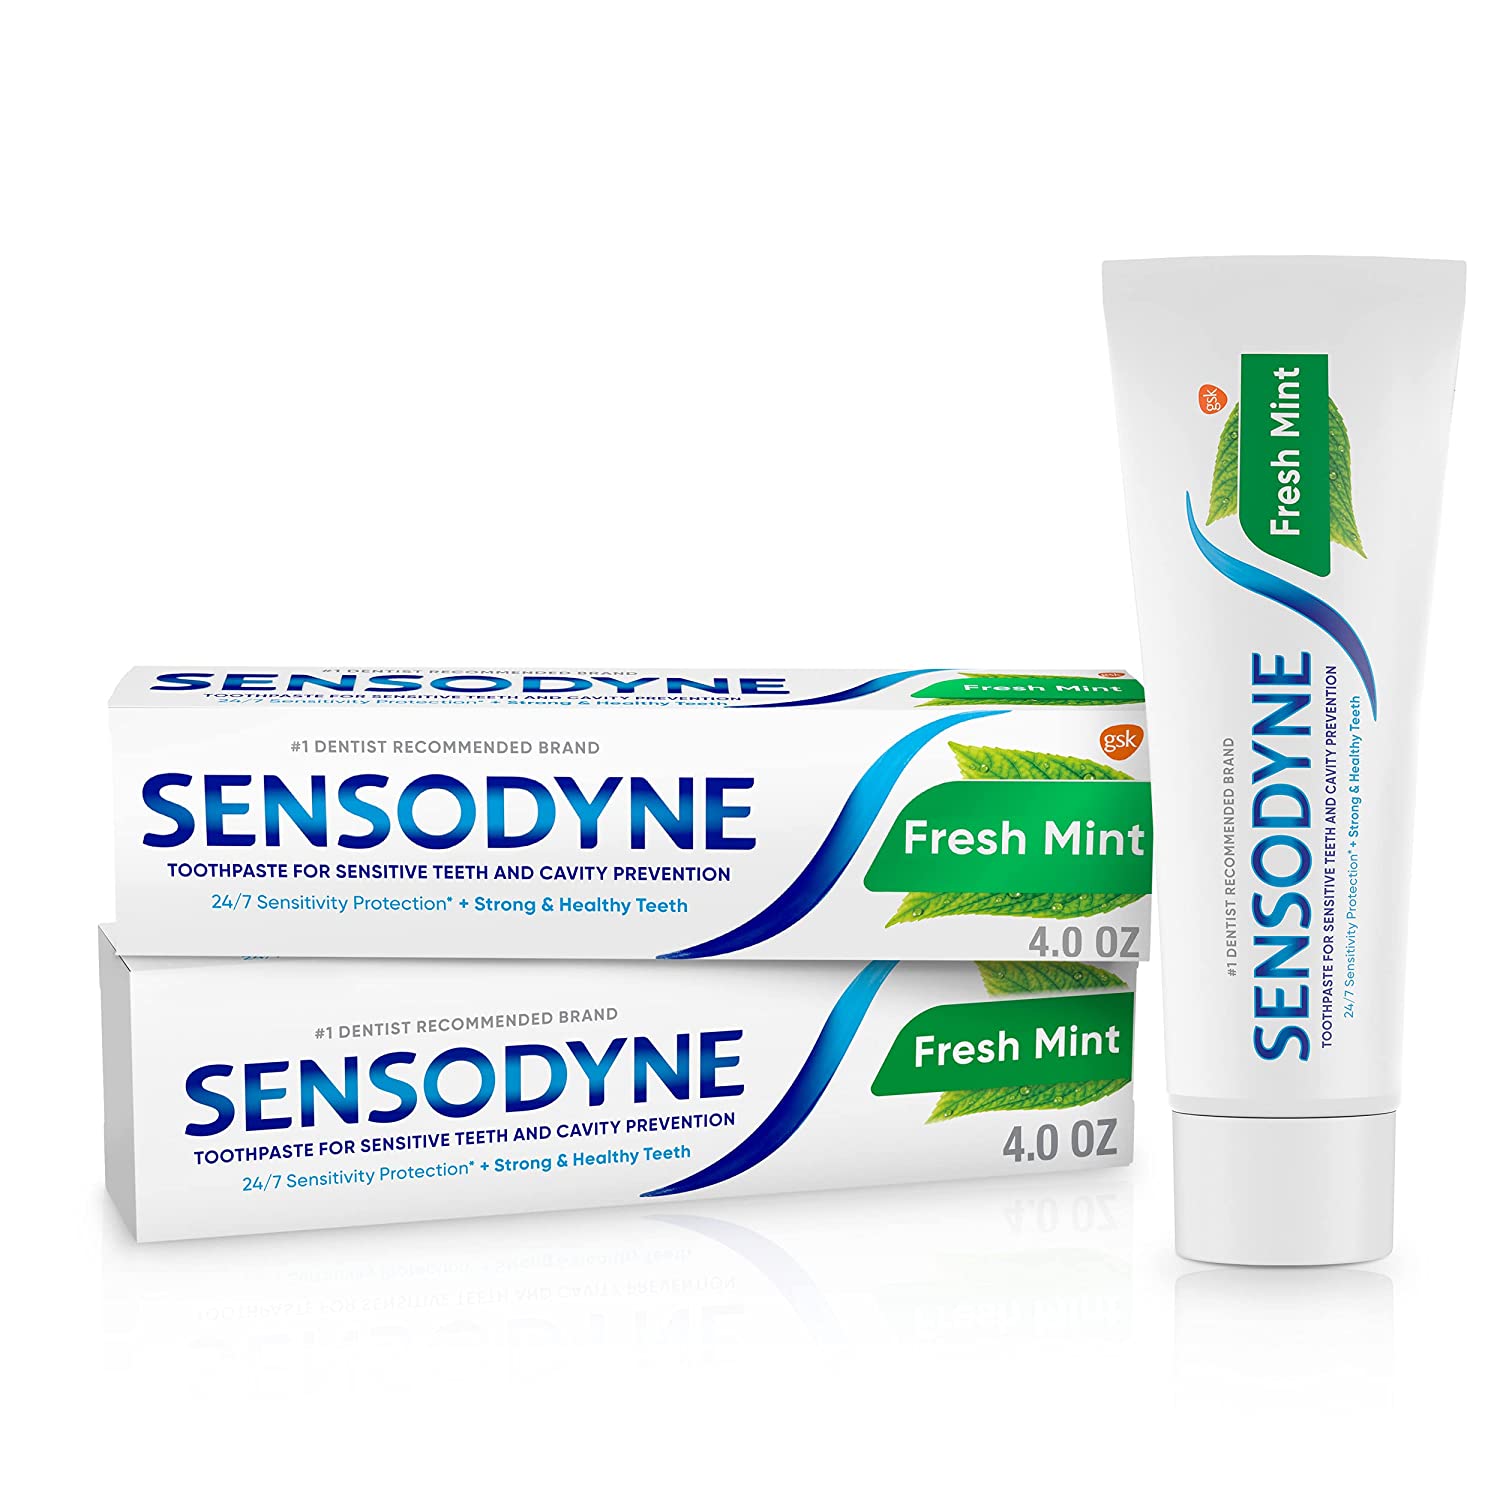 Sensodyne Sensitivity Toothpaste For Sensitive Teeth In Mint (2-Pack)